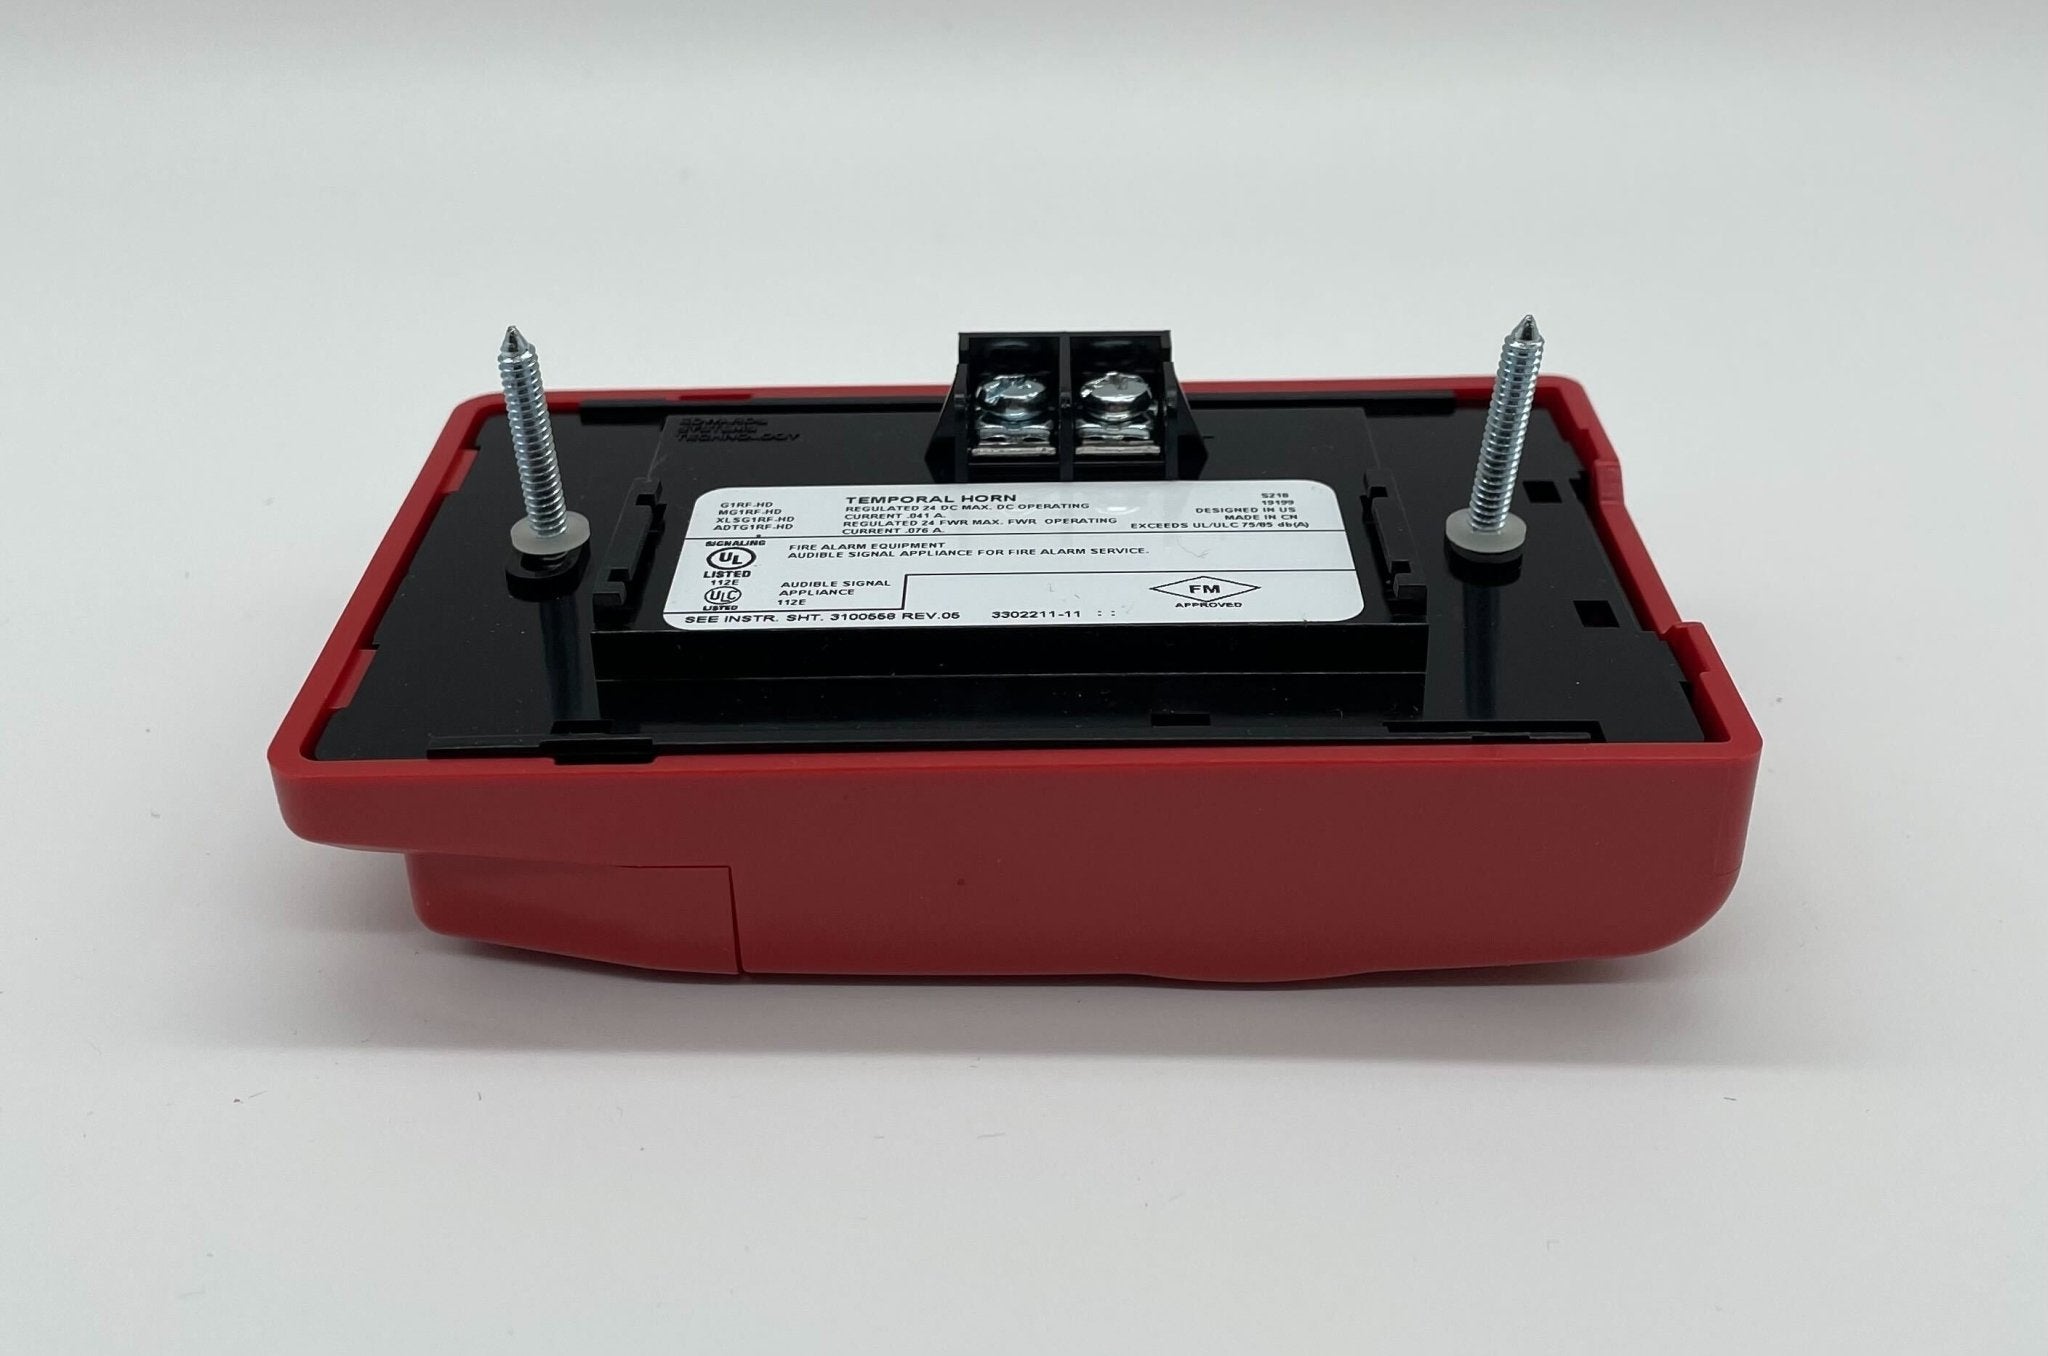 Edwards G1RF-HD - The Fire Alarm Supplier